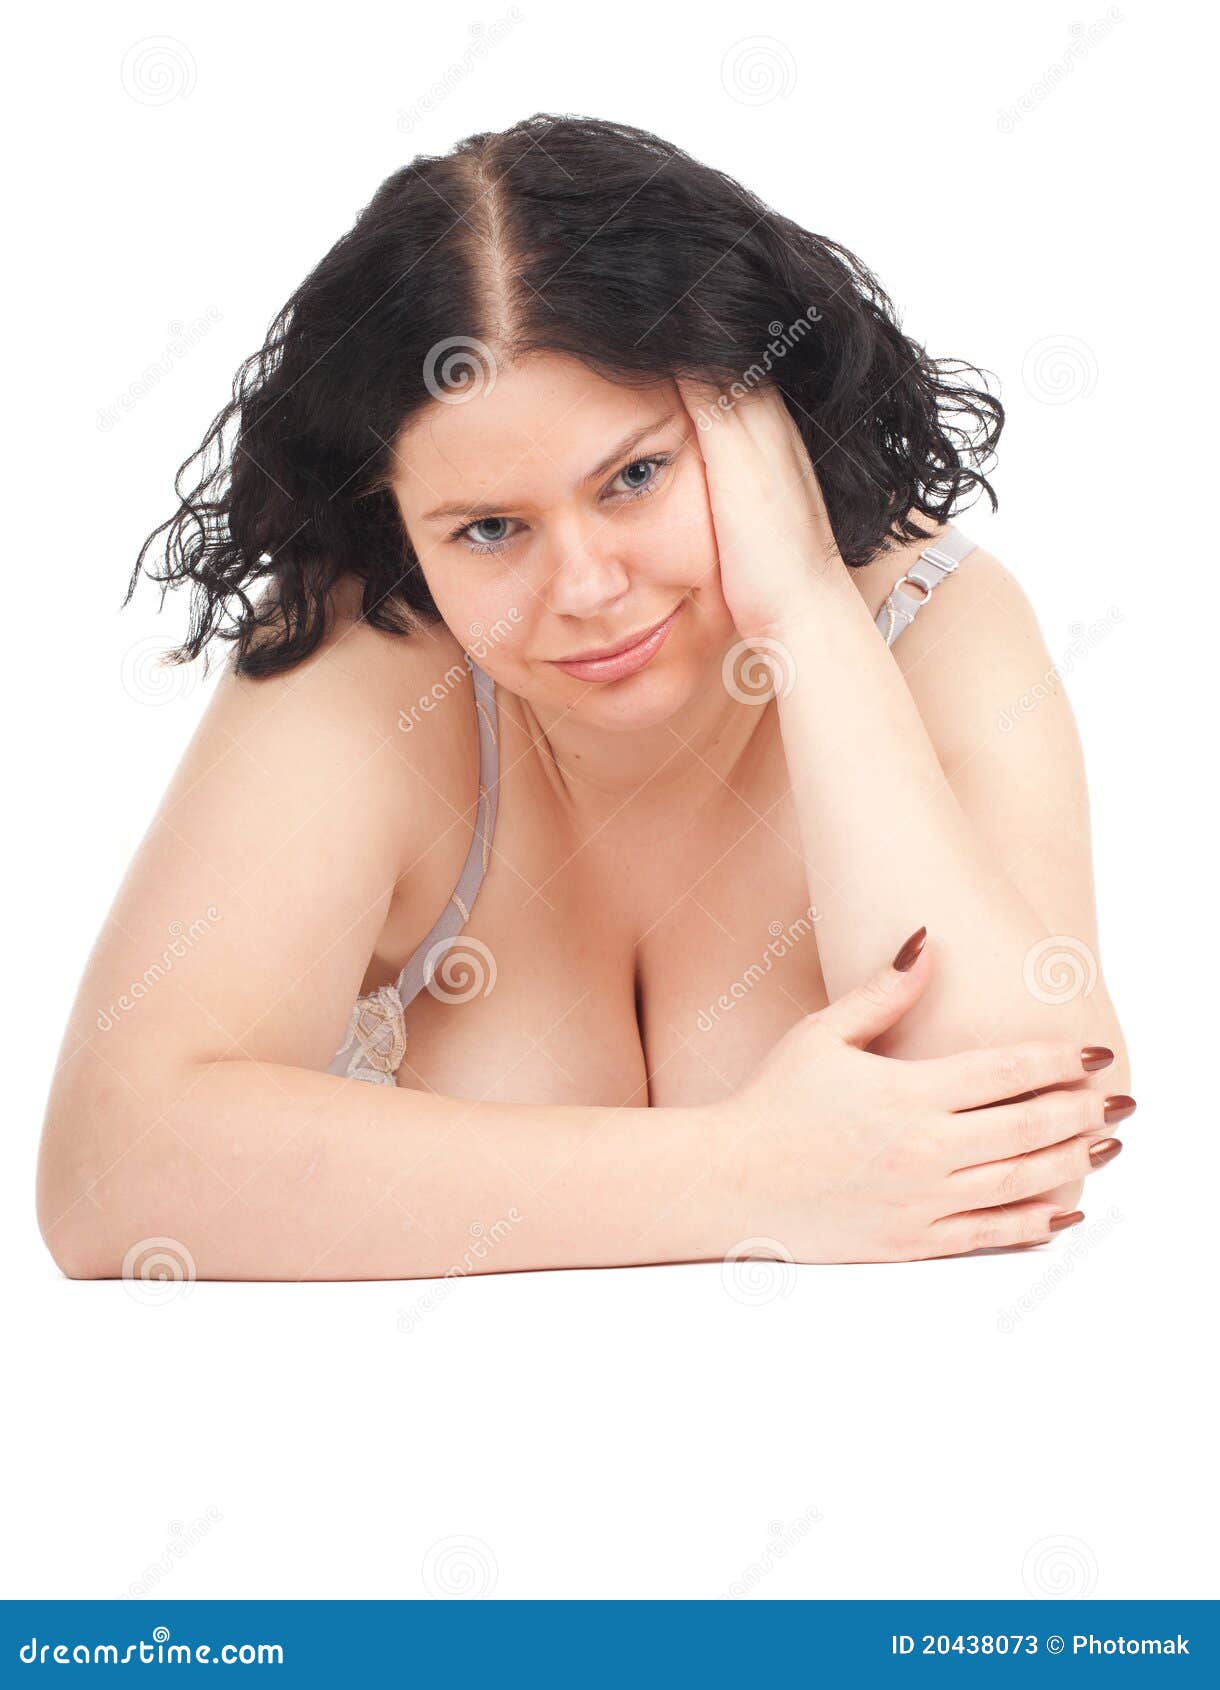 Fat woman in underwear stock image hq image